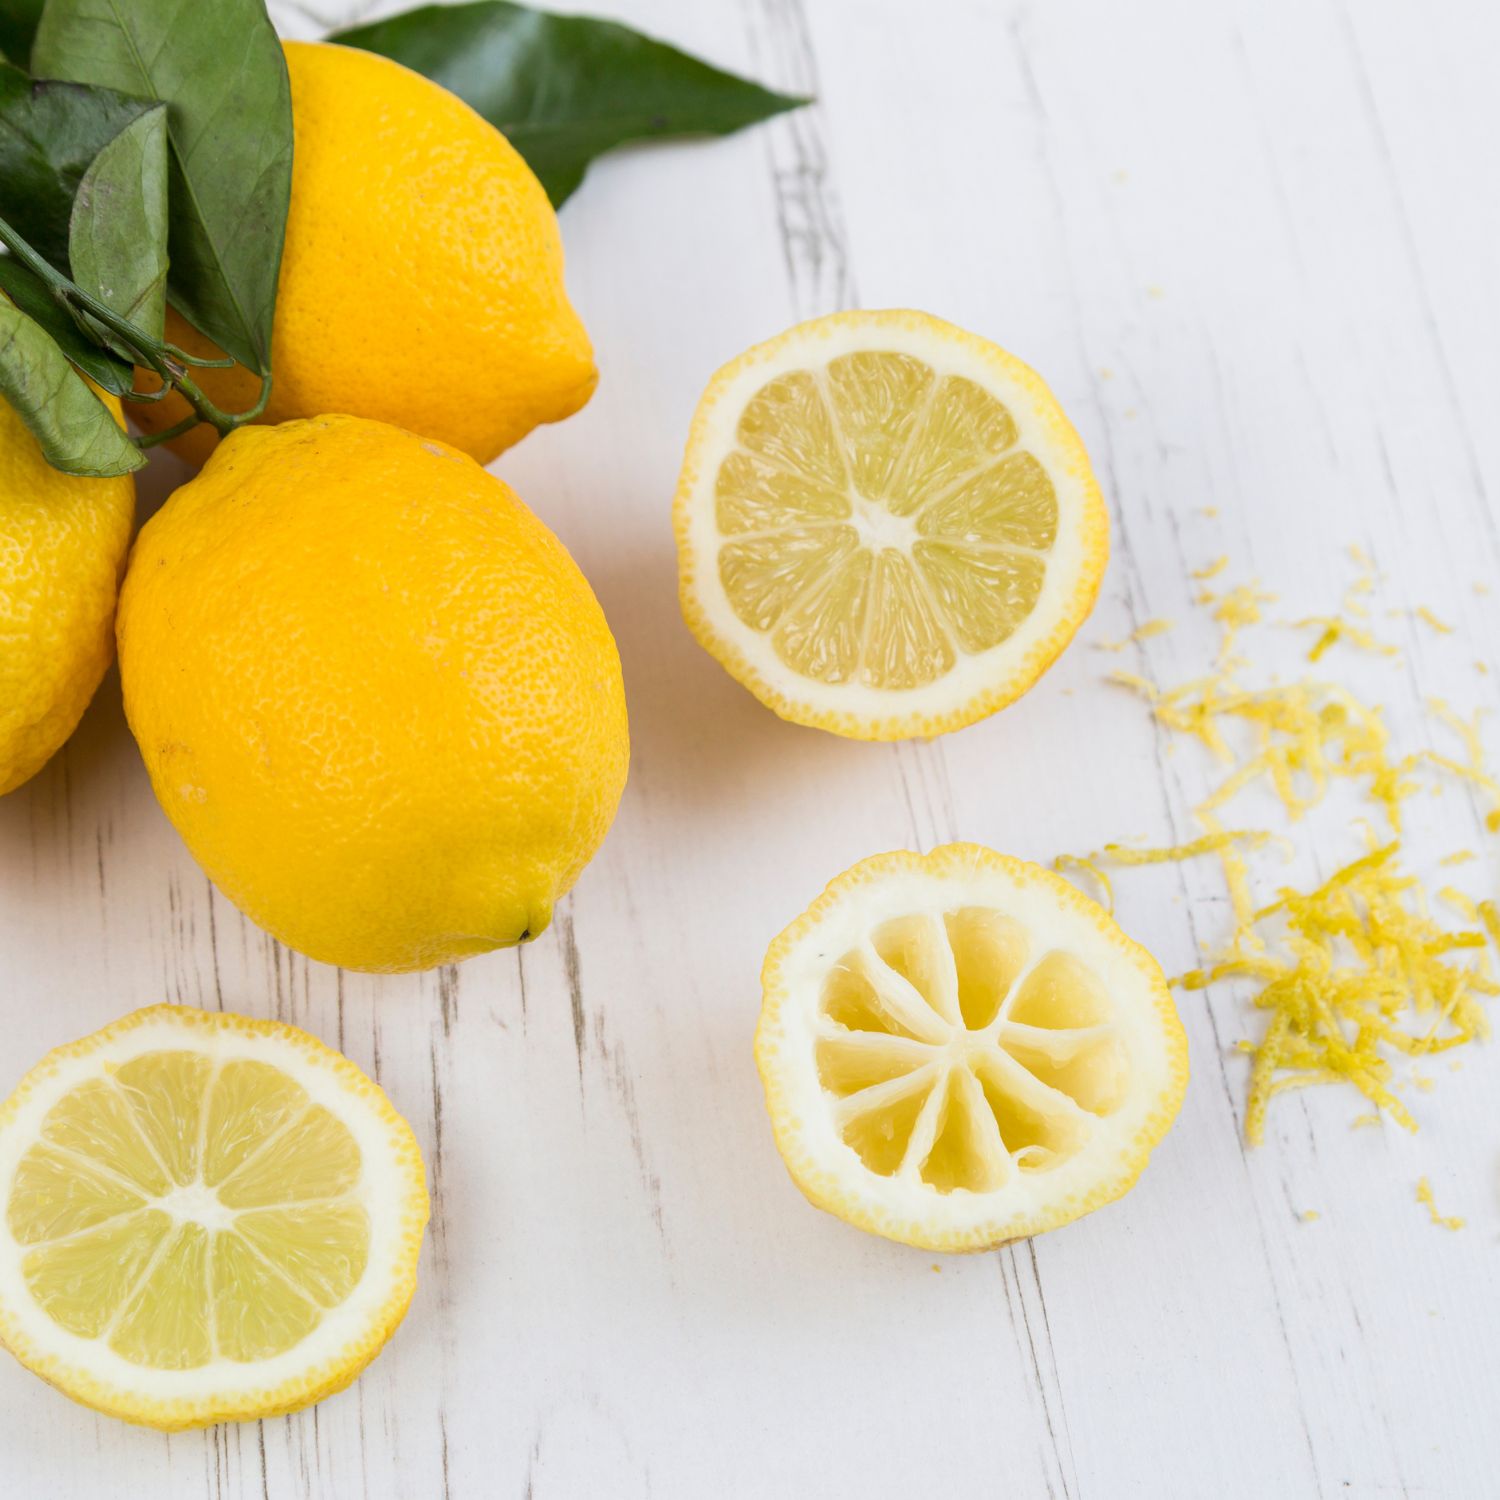 Lemon Zest vs. Lemon Juice